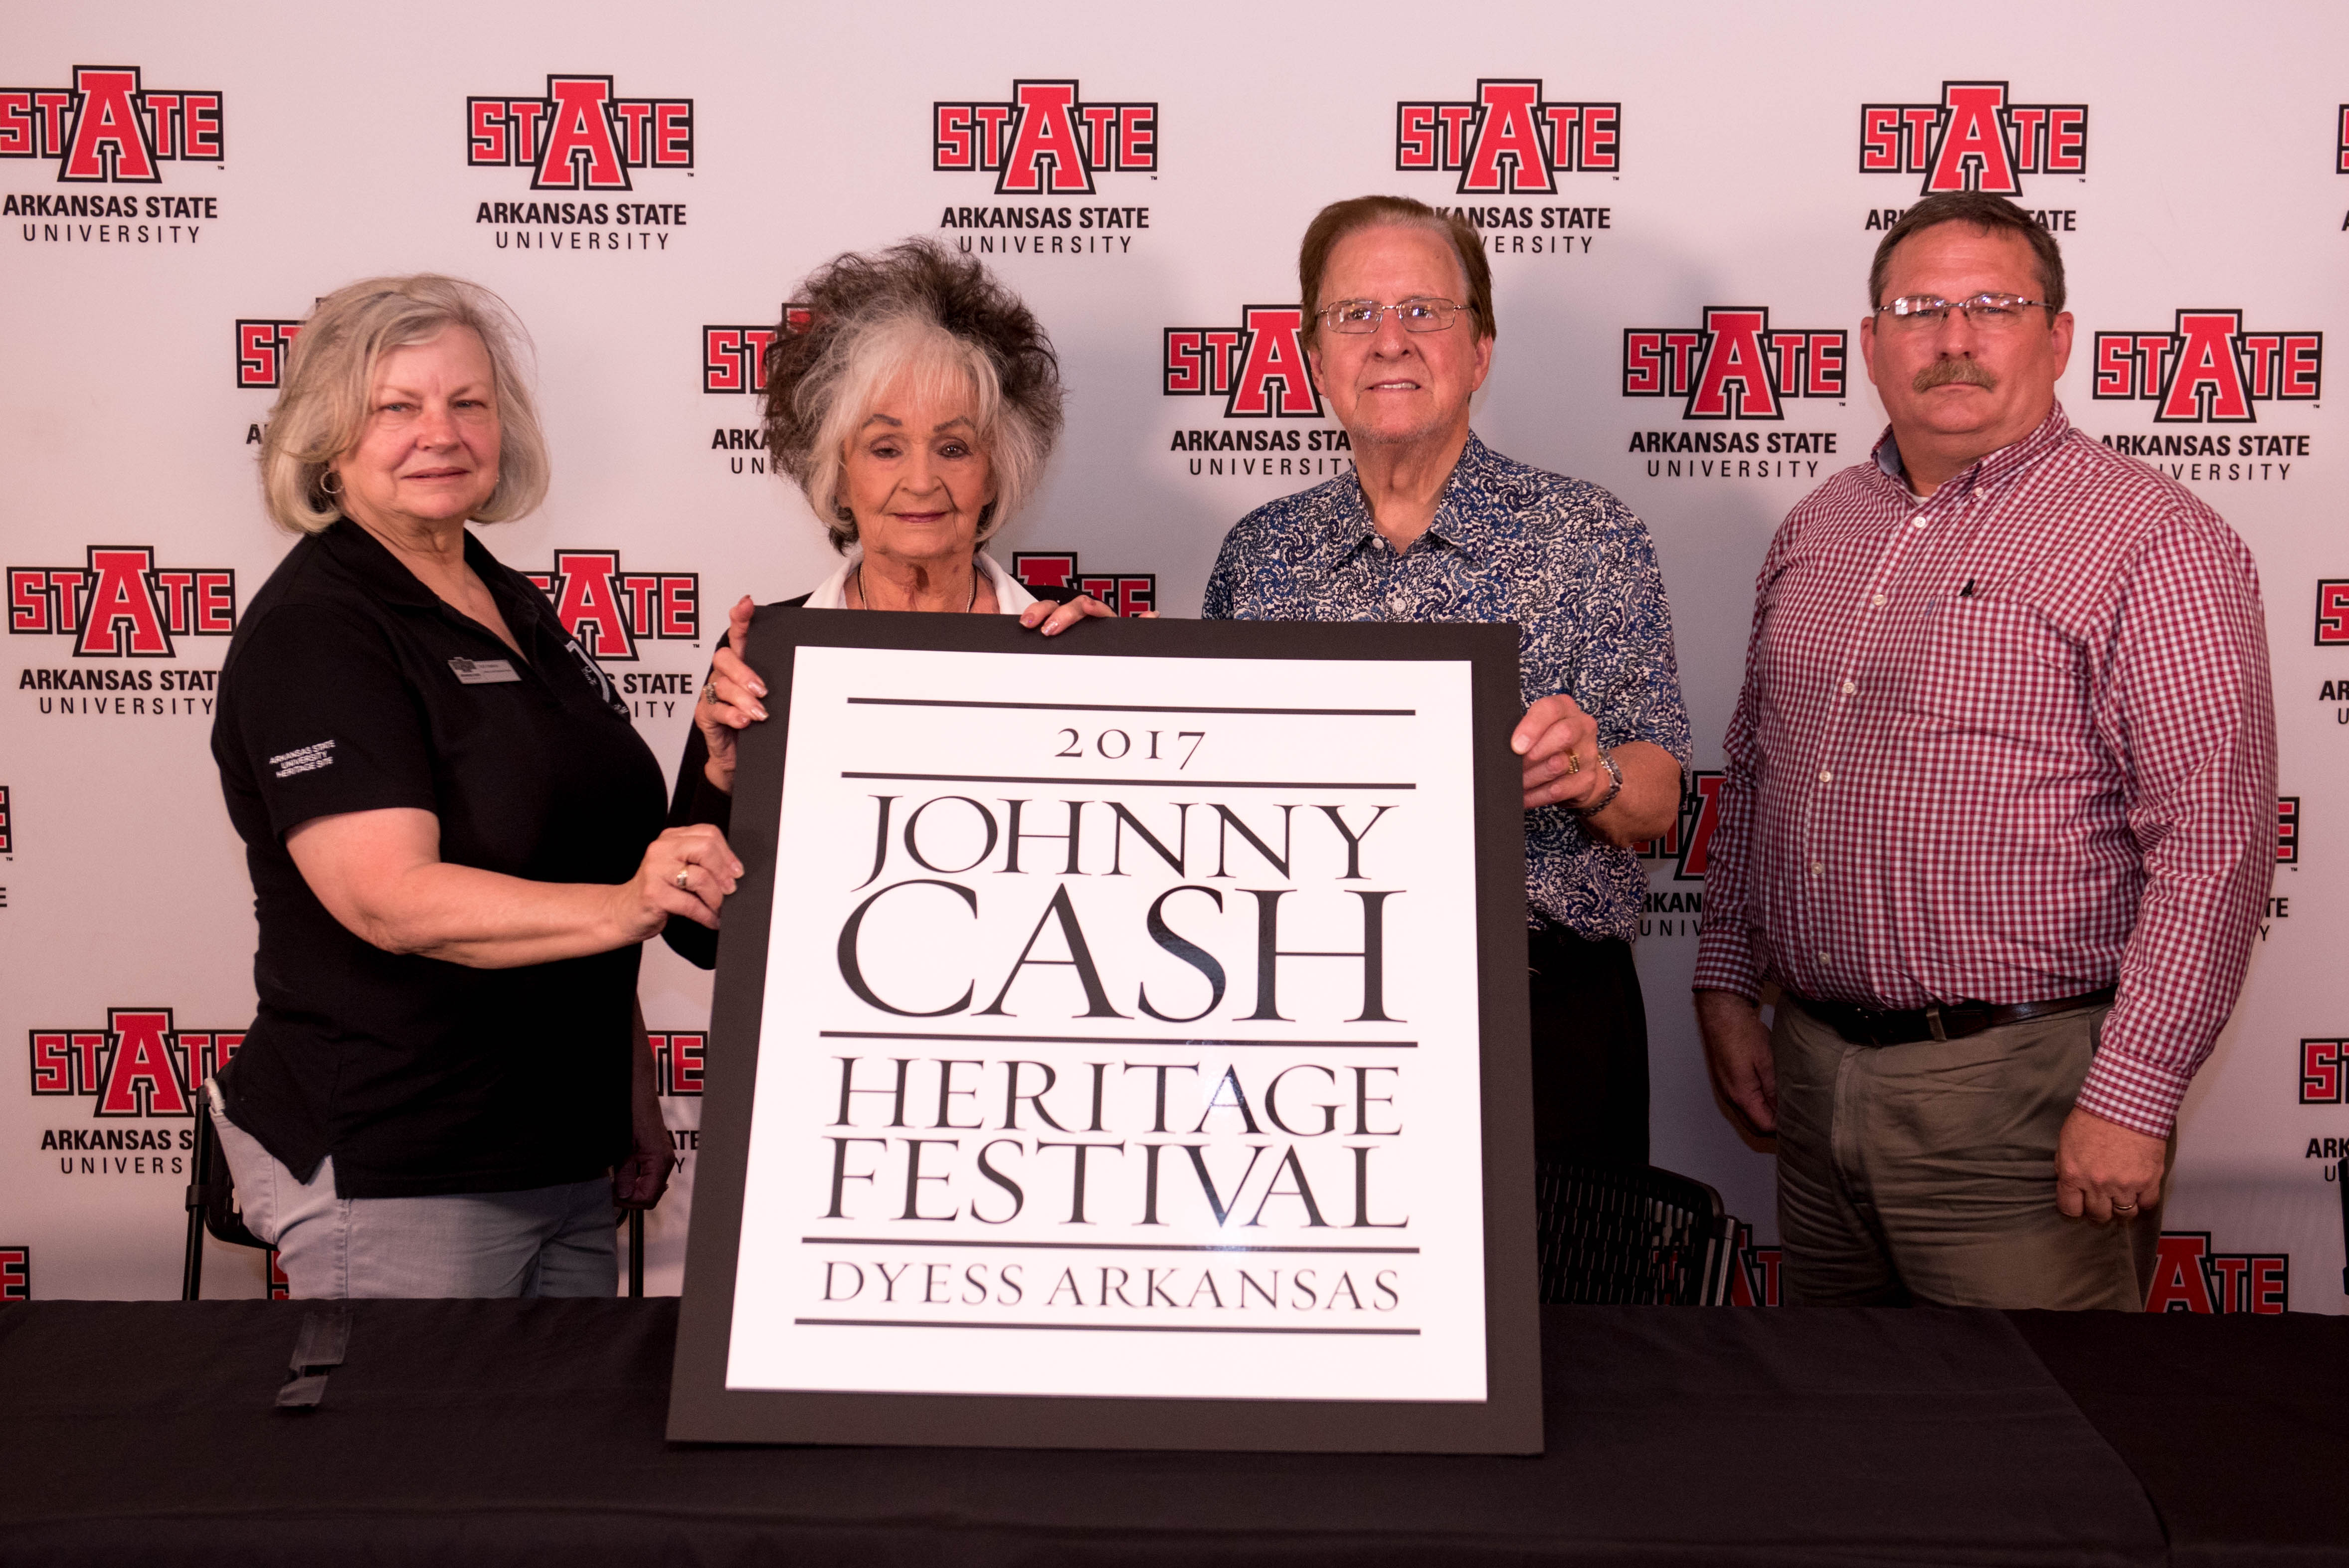 Johnny Cash Heritage Festival